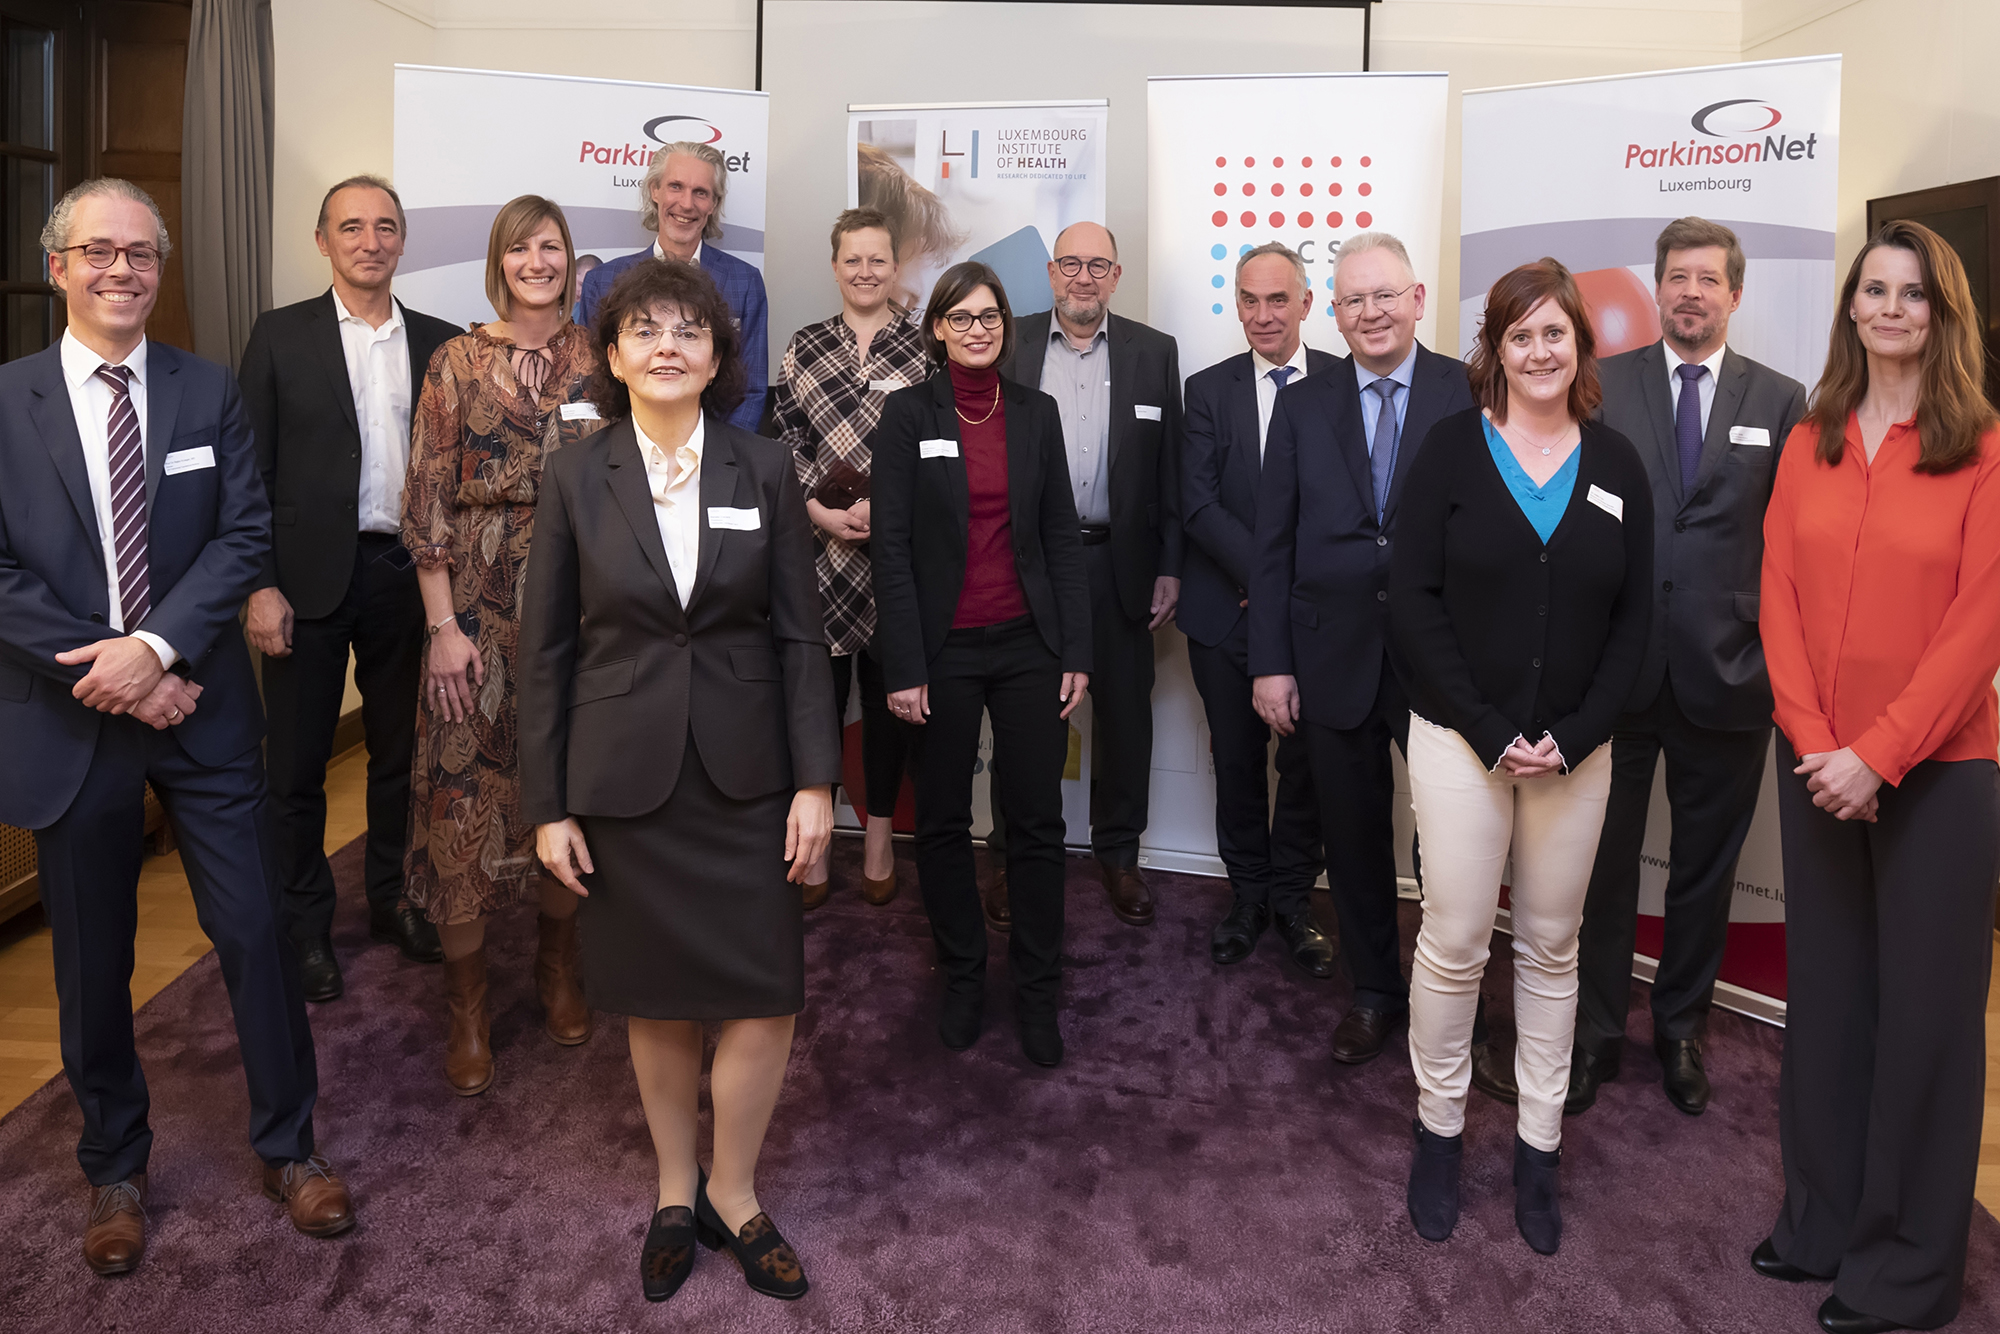 ParkinsonNet Luxembourg feiert sein 5-jähriges Bestehen